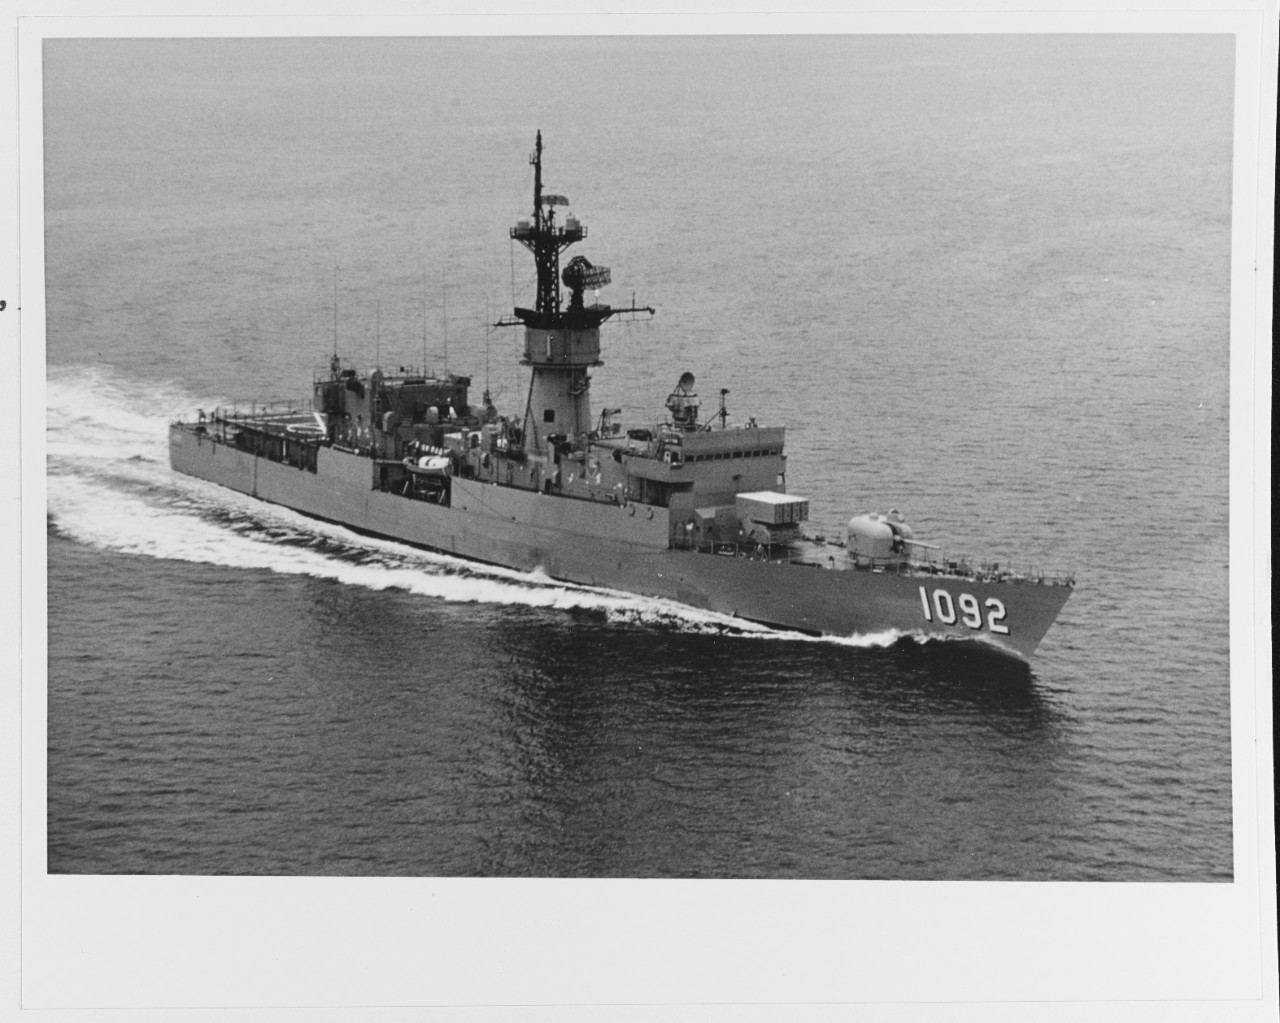 USS THOMAS C. HART (DE-1092)